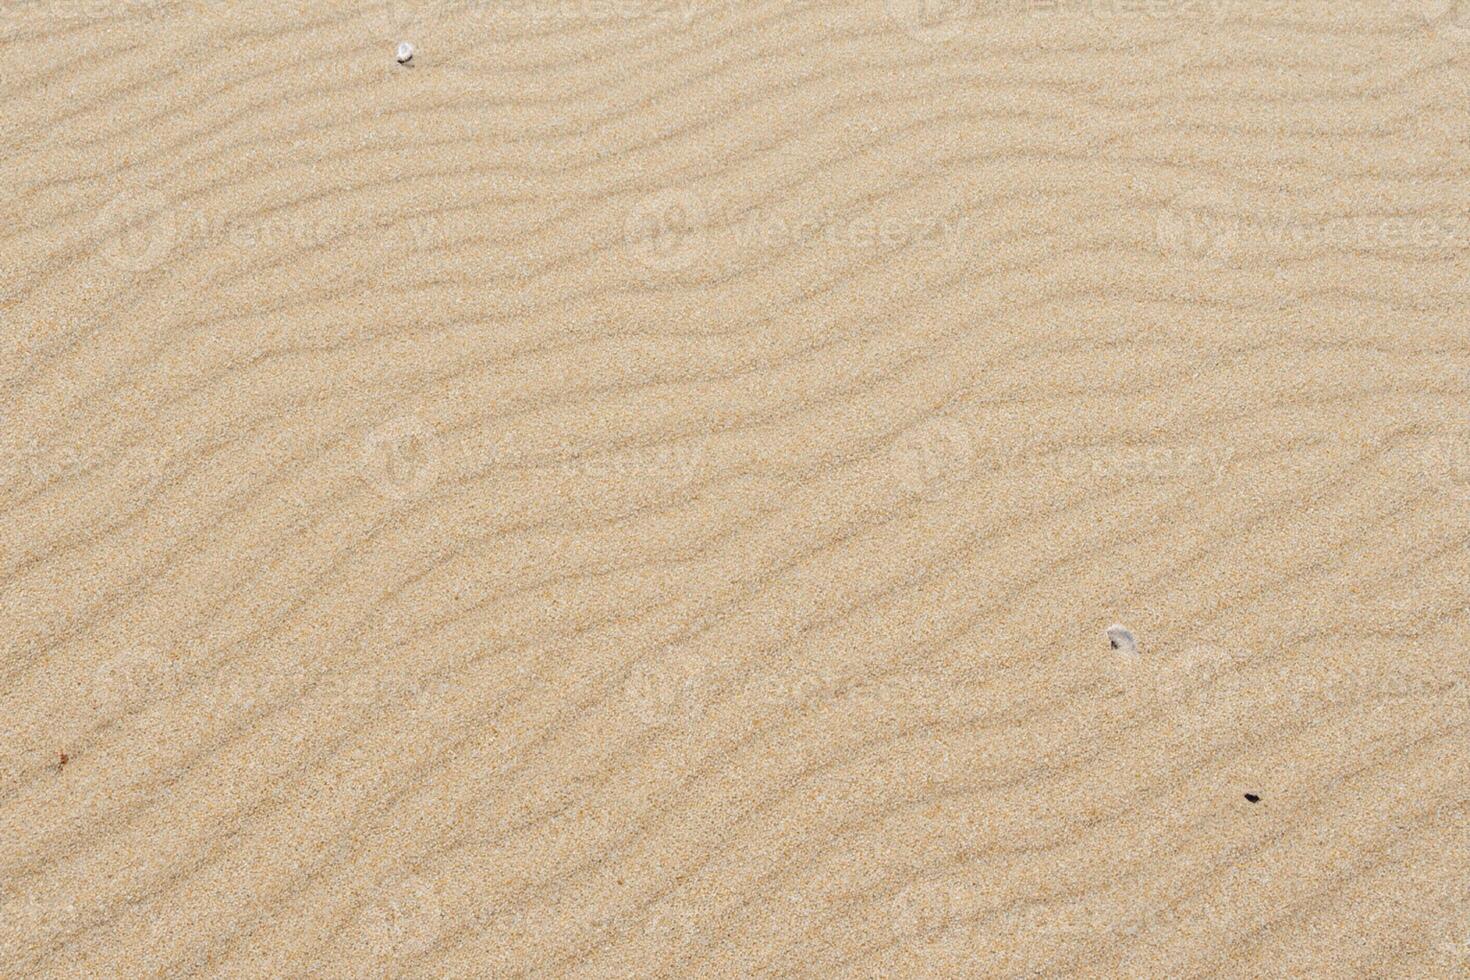 sandstrand av lugn fattande de skönhet av naturlig motiv sandstrand, en lugn gobeläng av jordens mönster foto